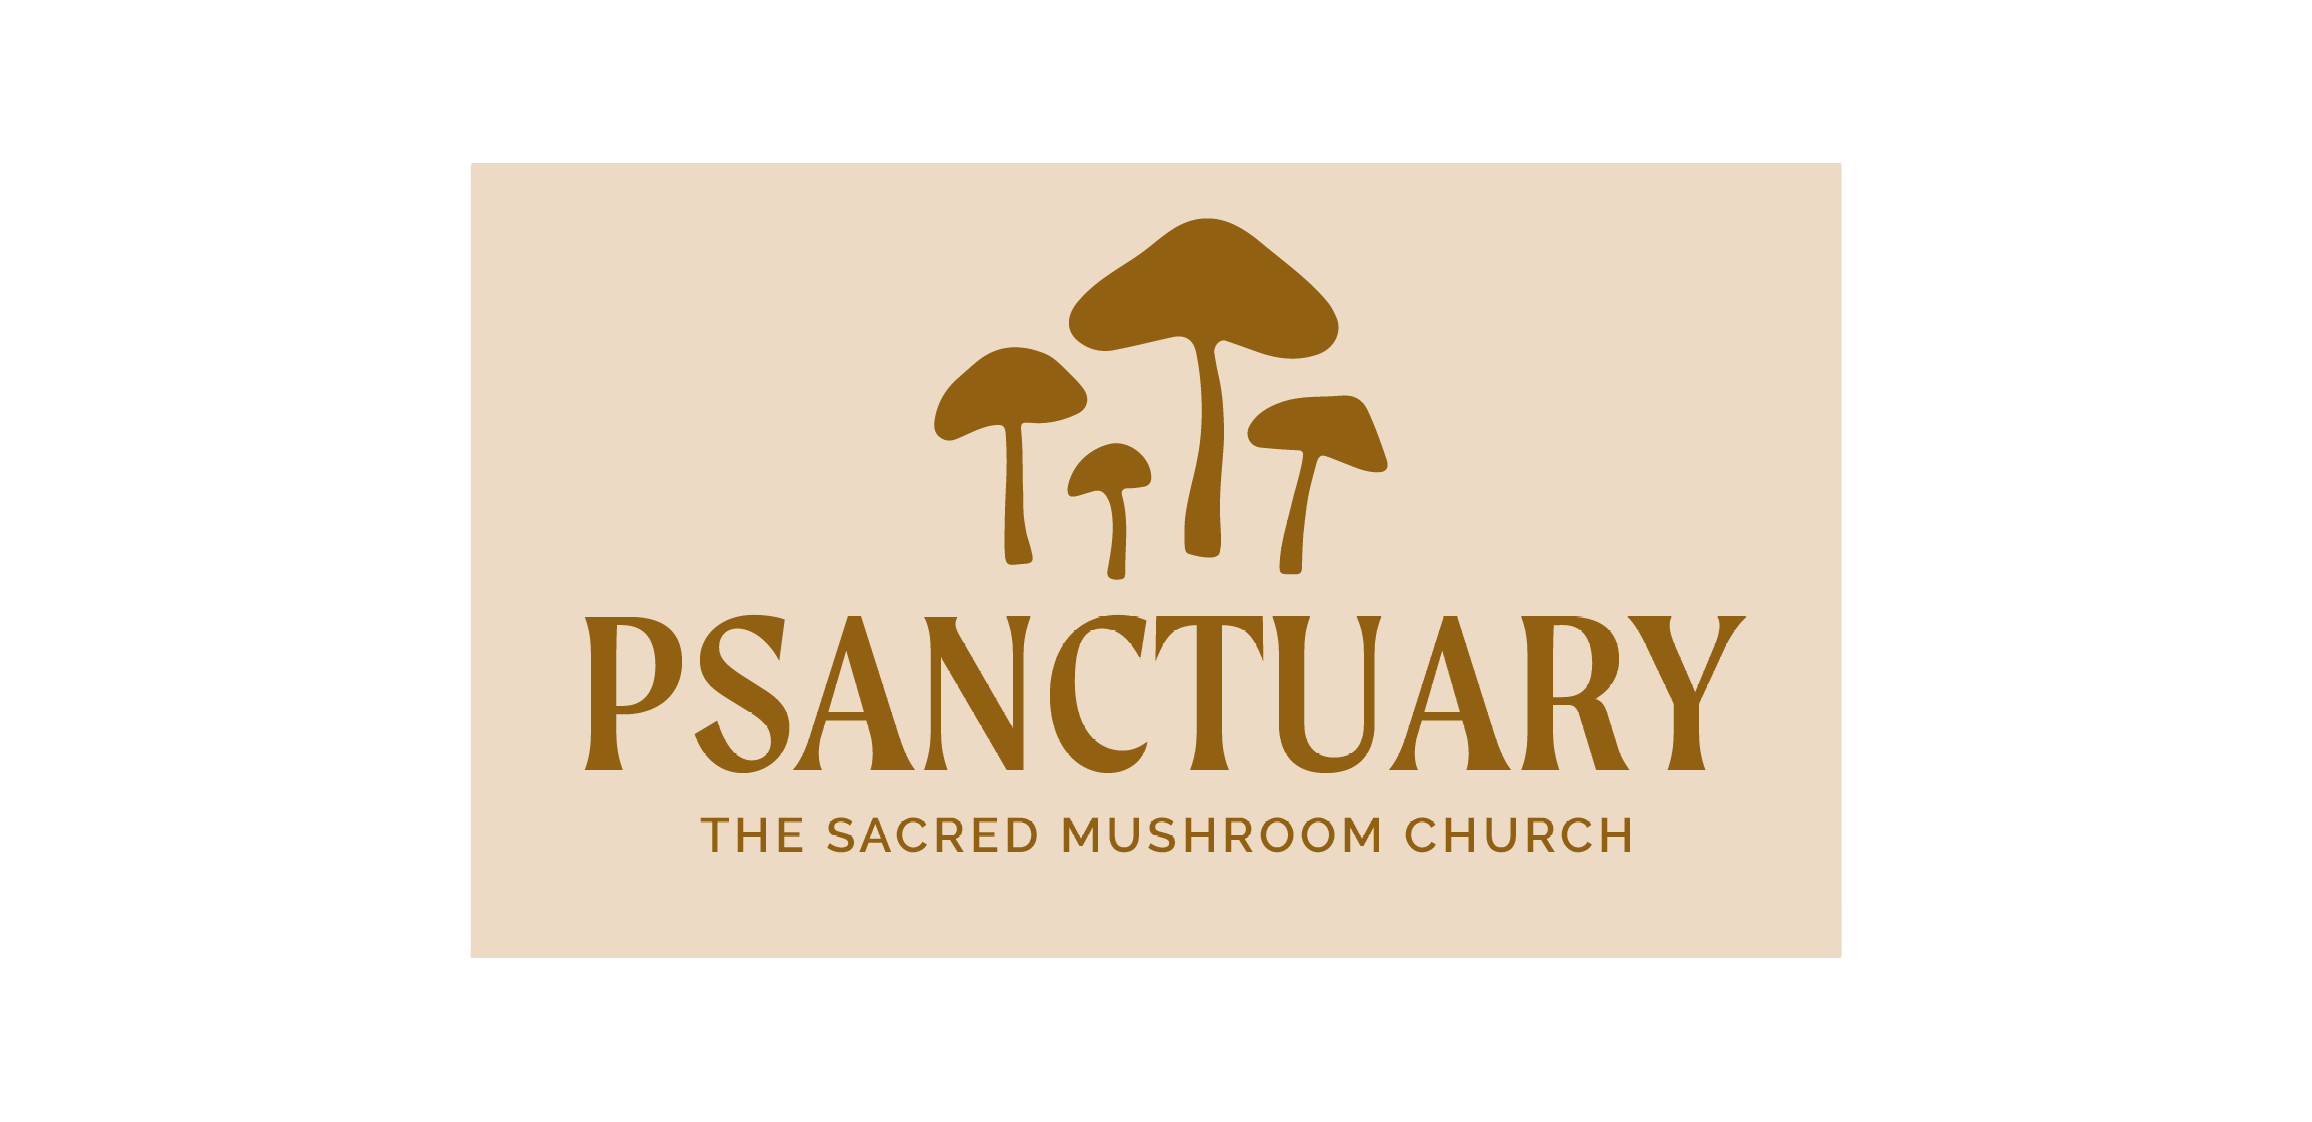 The Sacred Mushroom Church - Psanctuary Church